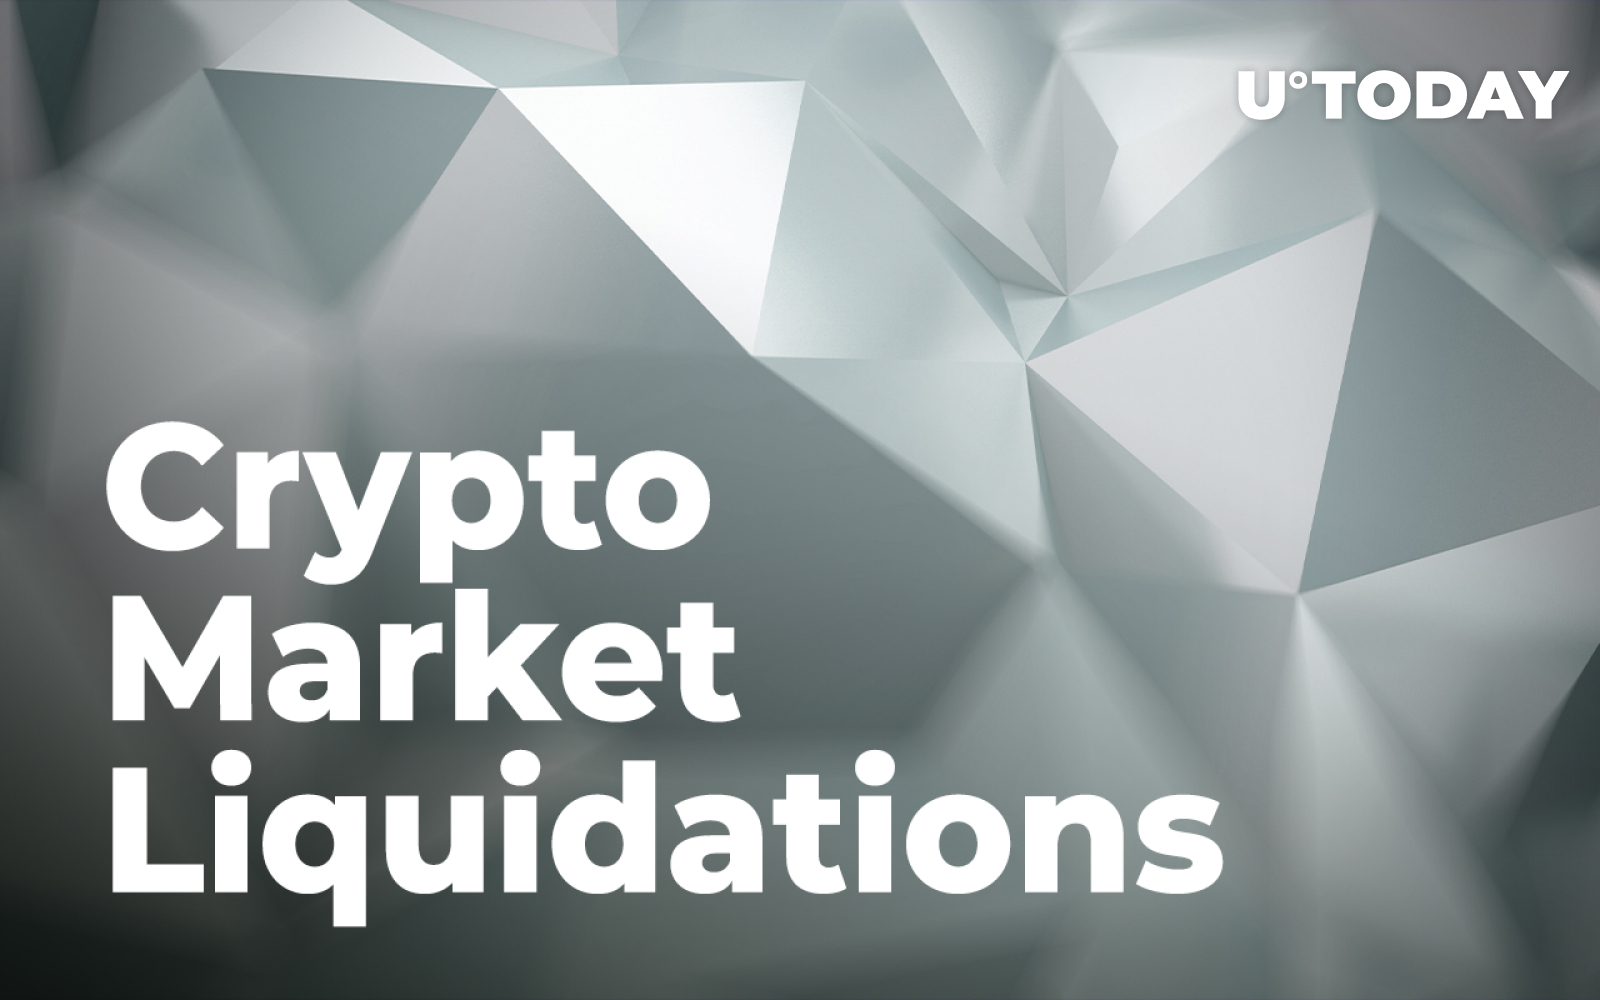 crypto liquidations today